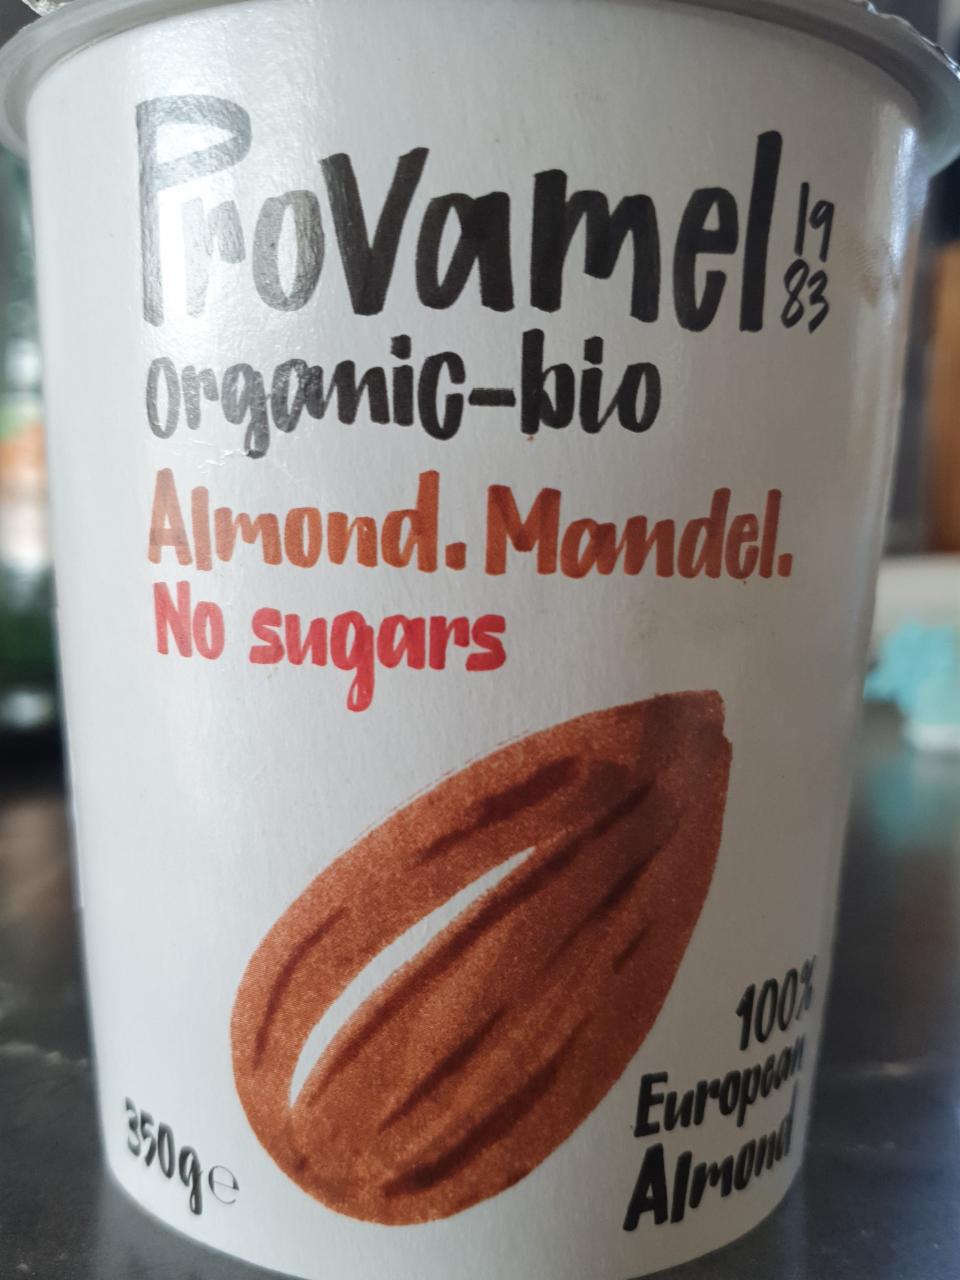 Fotografie - Provamel organic bio almond mandel no sugars